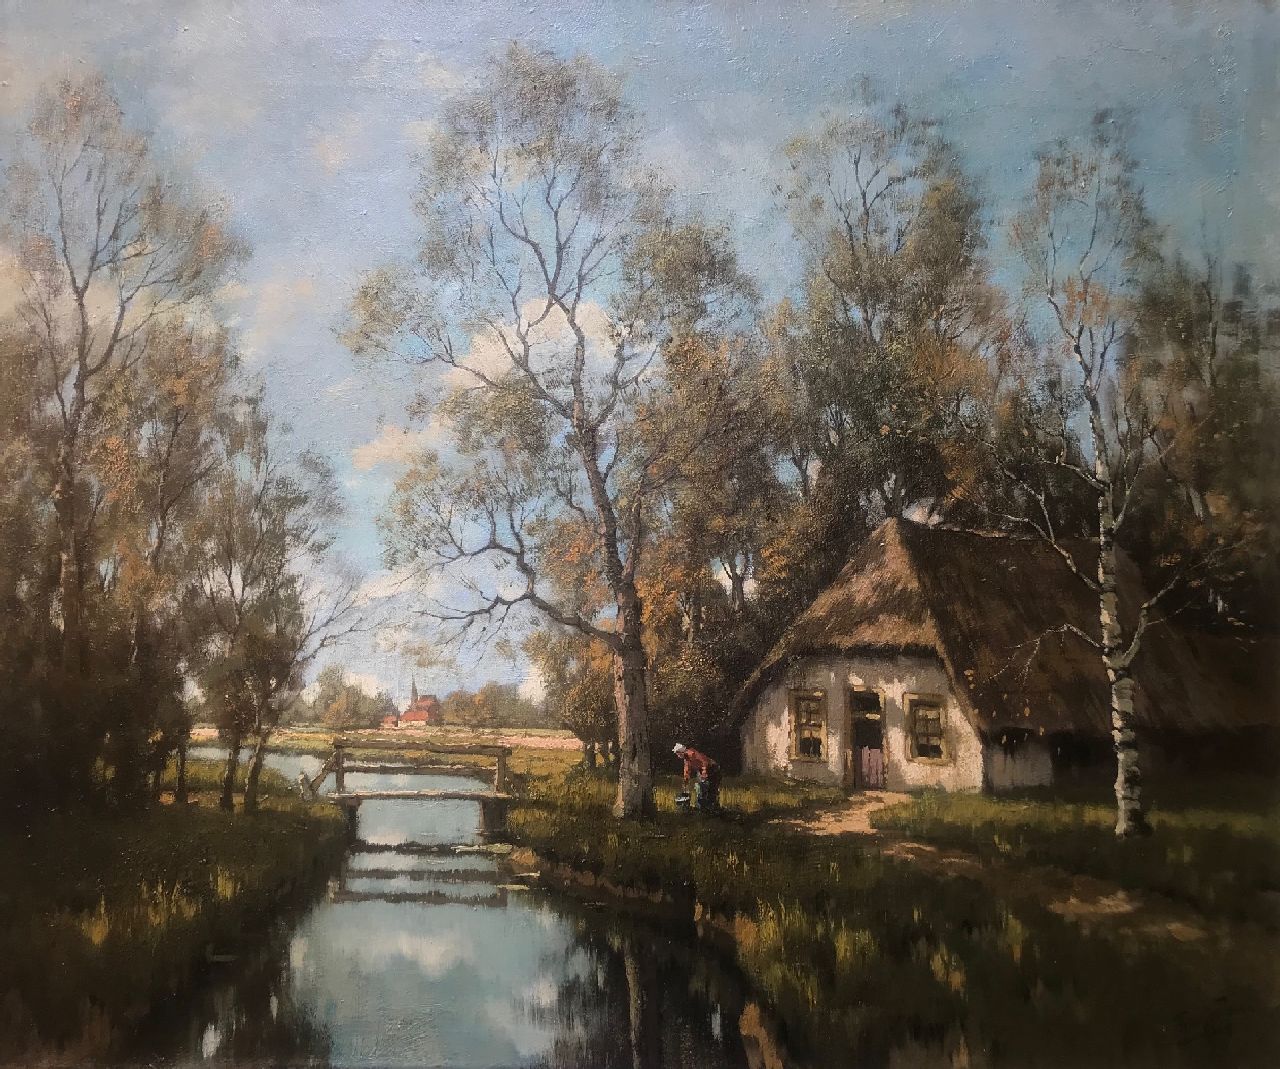 Jongh M.J. de | Martinus Johannes 'Tinus' de Jongh | Paintings offered for sale | Farmhouse near a stream, oil on canvas 74.5 x 89.6 cm, signed l.r.